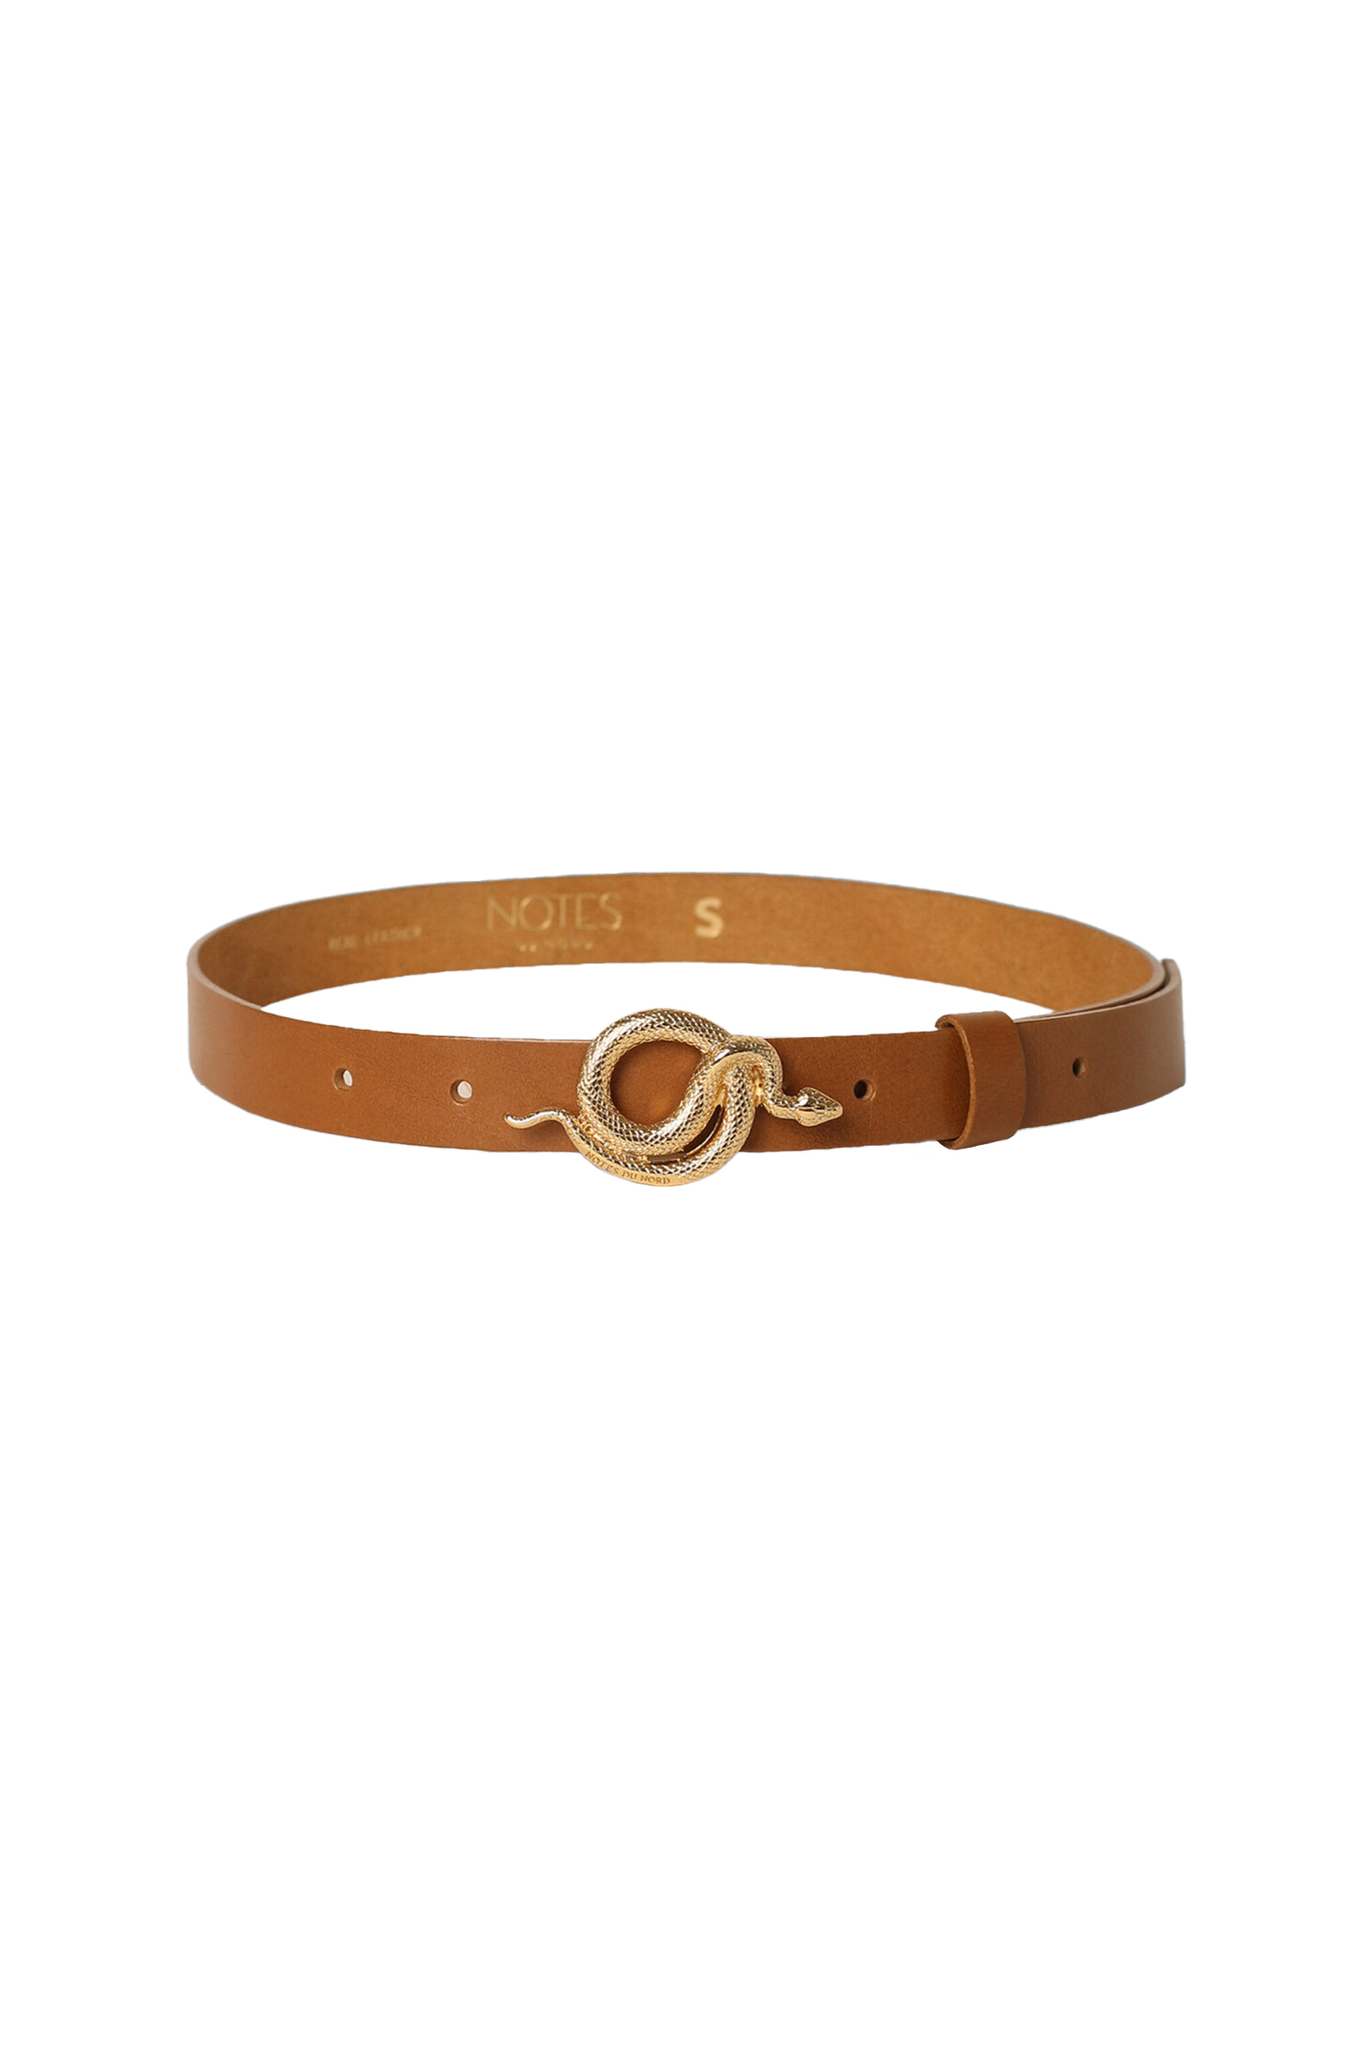 Milo Leather Belt - Cognac / Gold-1